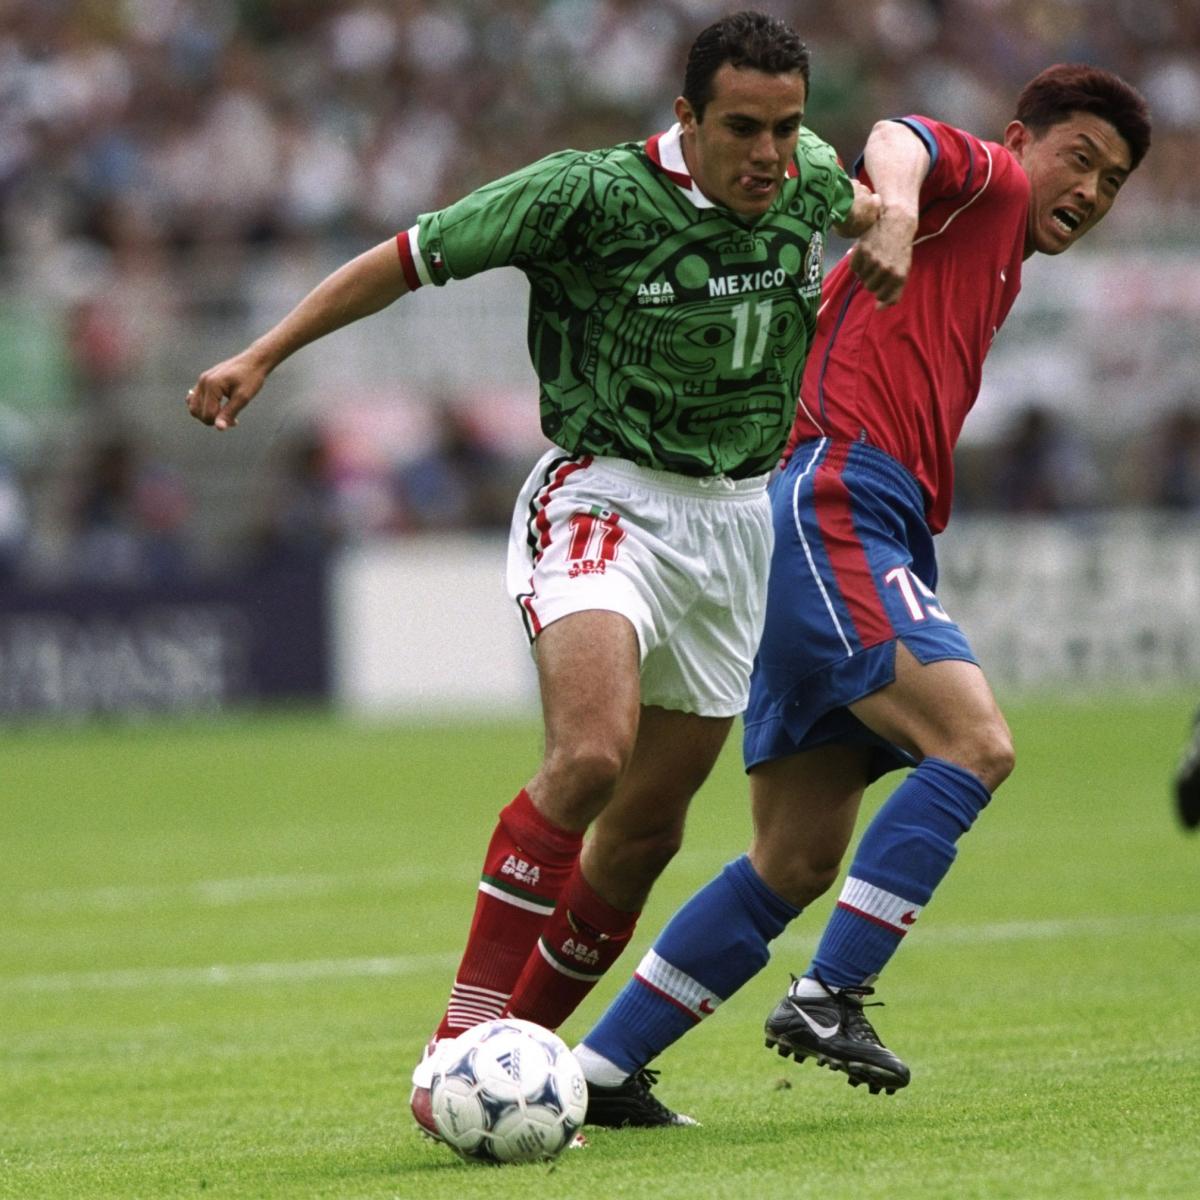 SoccerRega Mexico 1998 Retro Futbol Shirt World Cup, Mexico 1998 Soccer Jersey. Whit Number 15 and Name Hernandez.